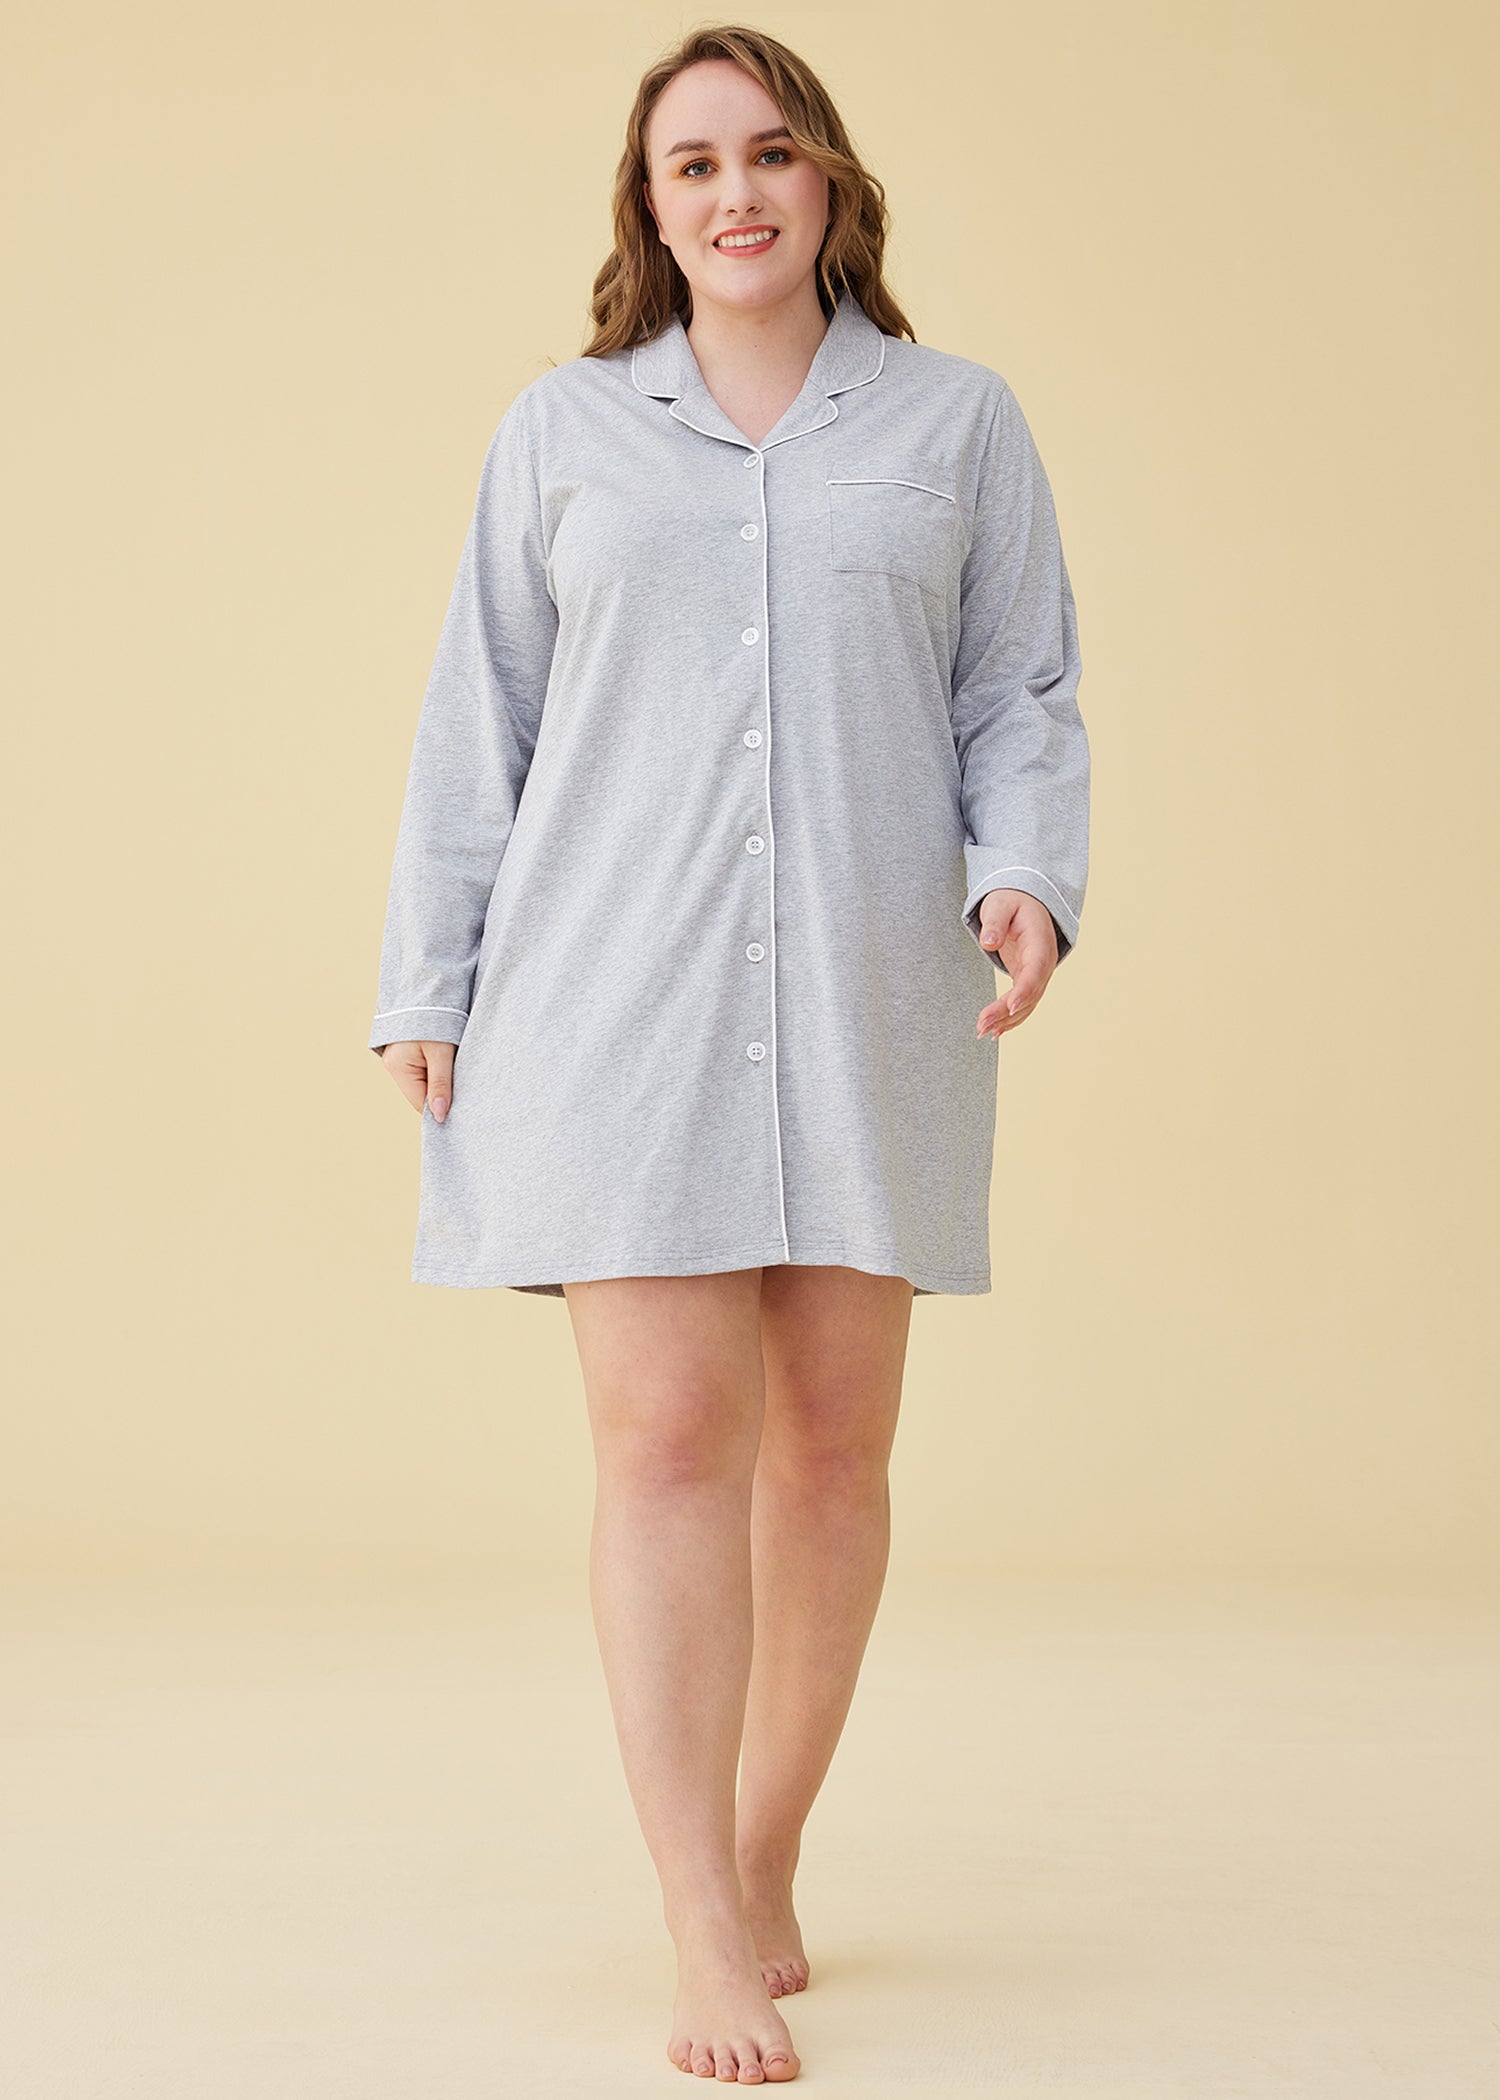 New,suitable Women's Cotton Sleep Shirt, Long Sleeve Button-down